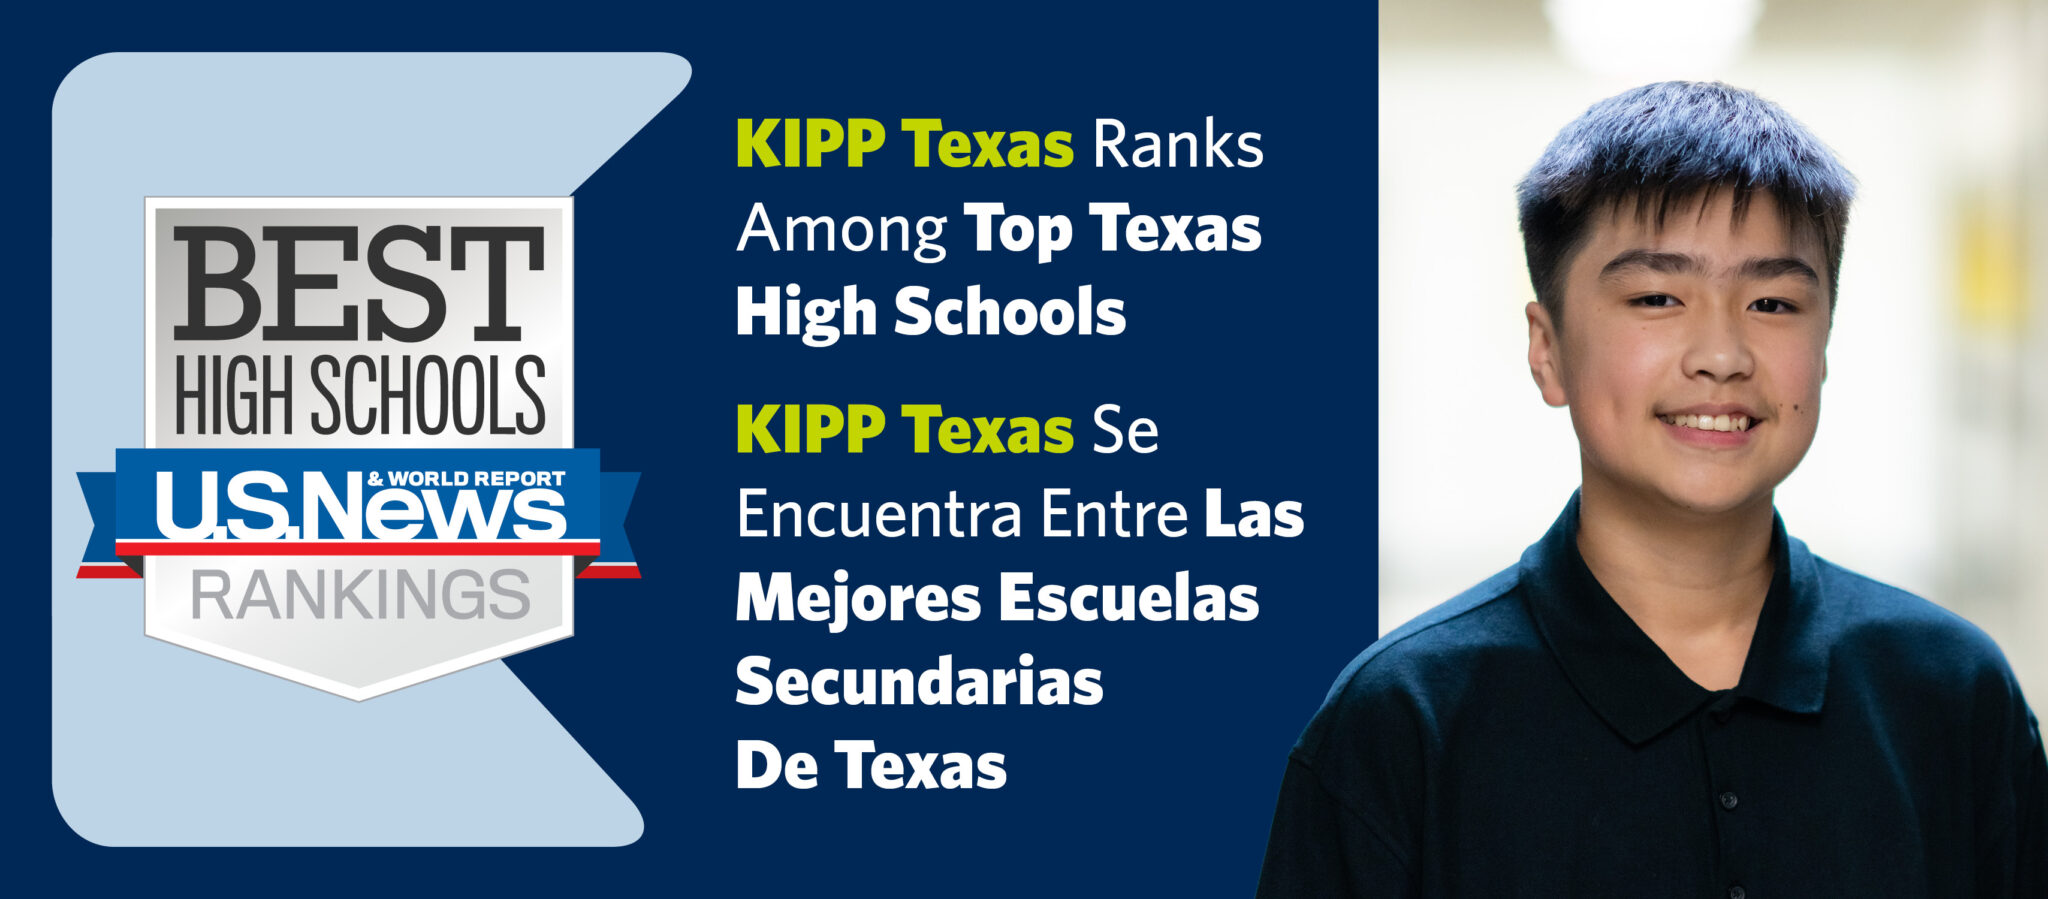 KIPP Texas best high schools award showcase